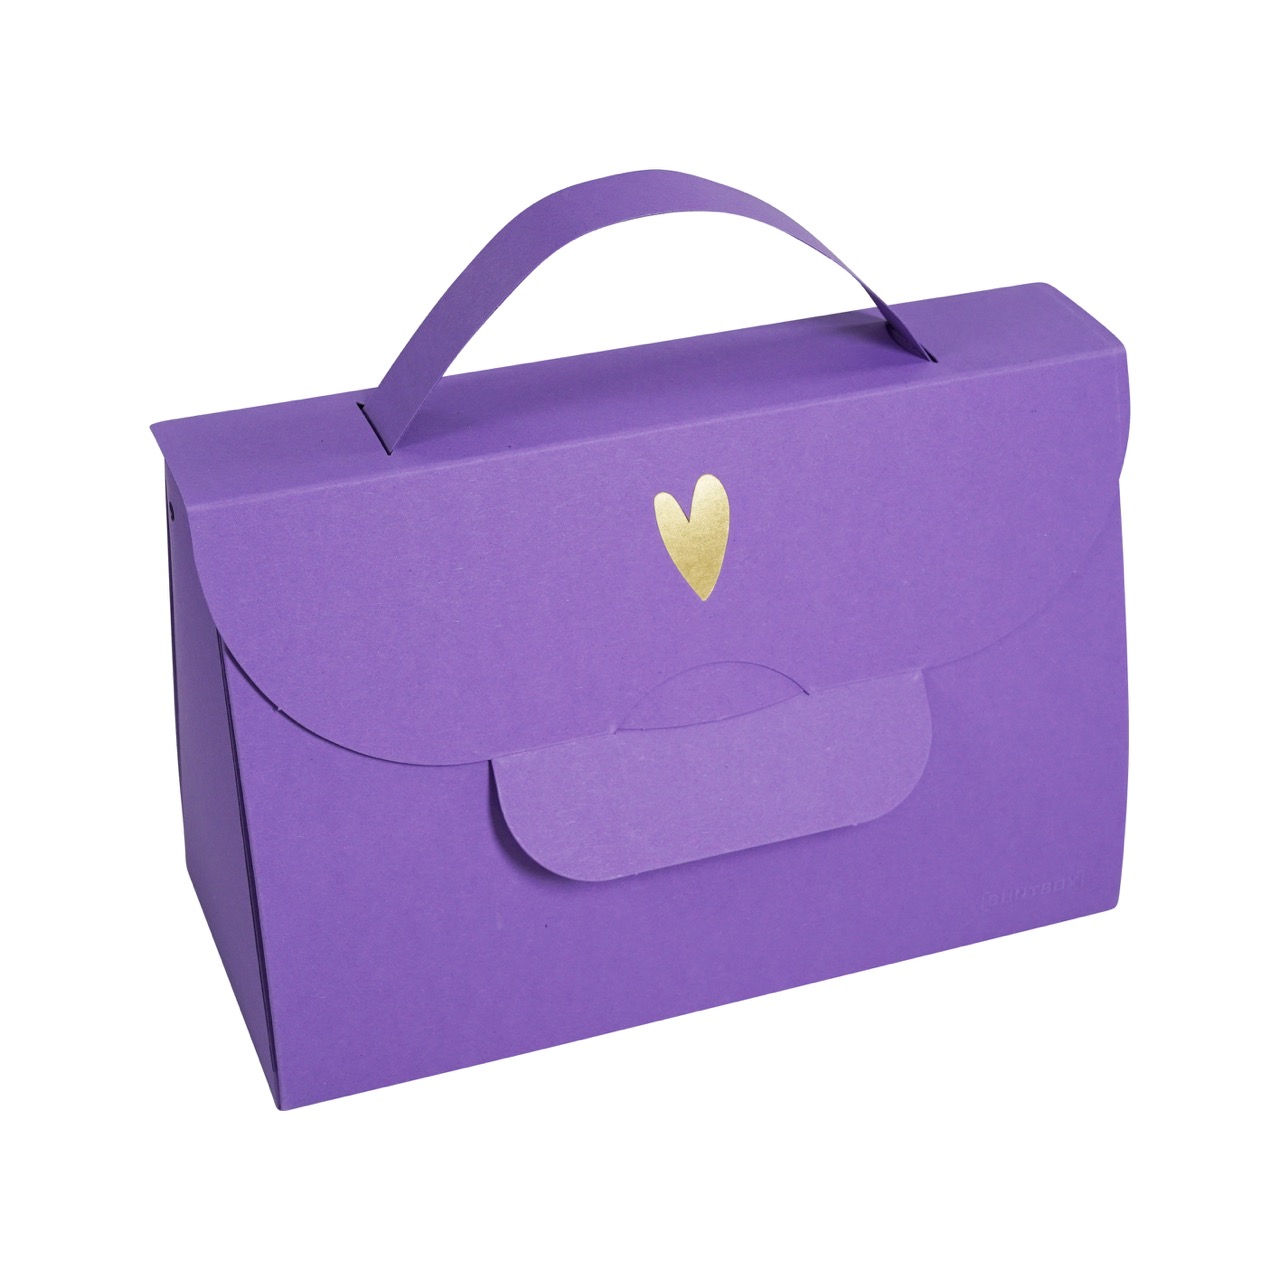 BUNTBOX Handbag Cuore d'oro  | borsa di cartone